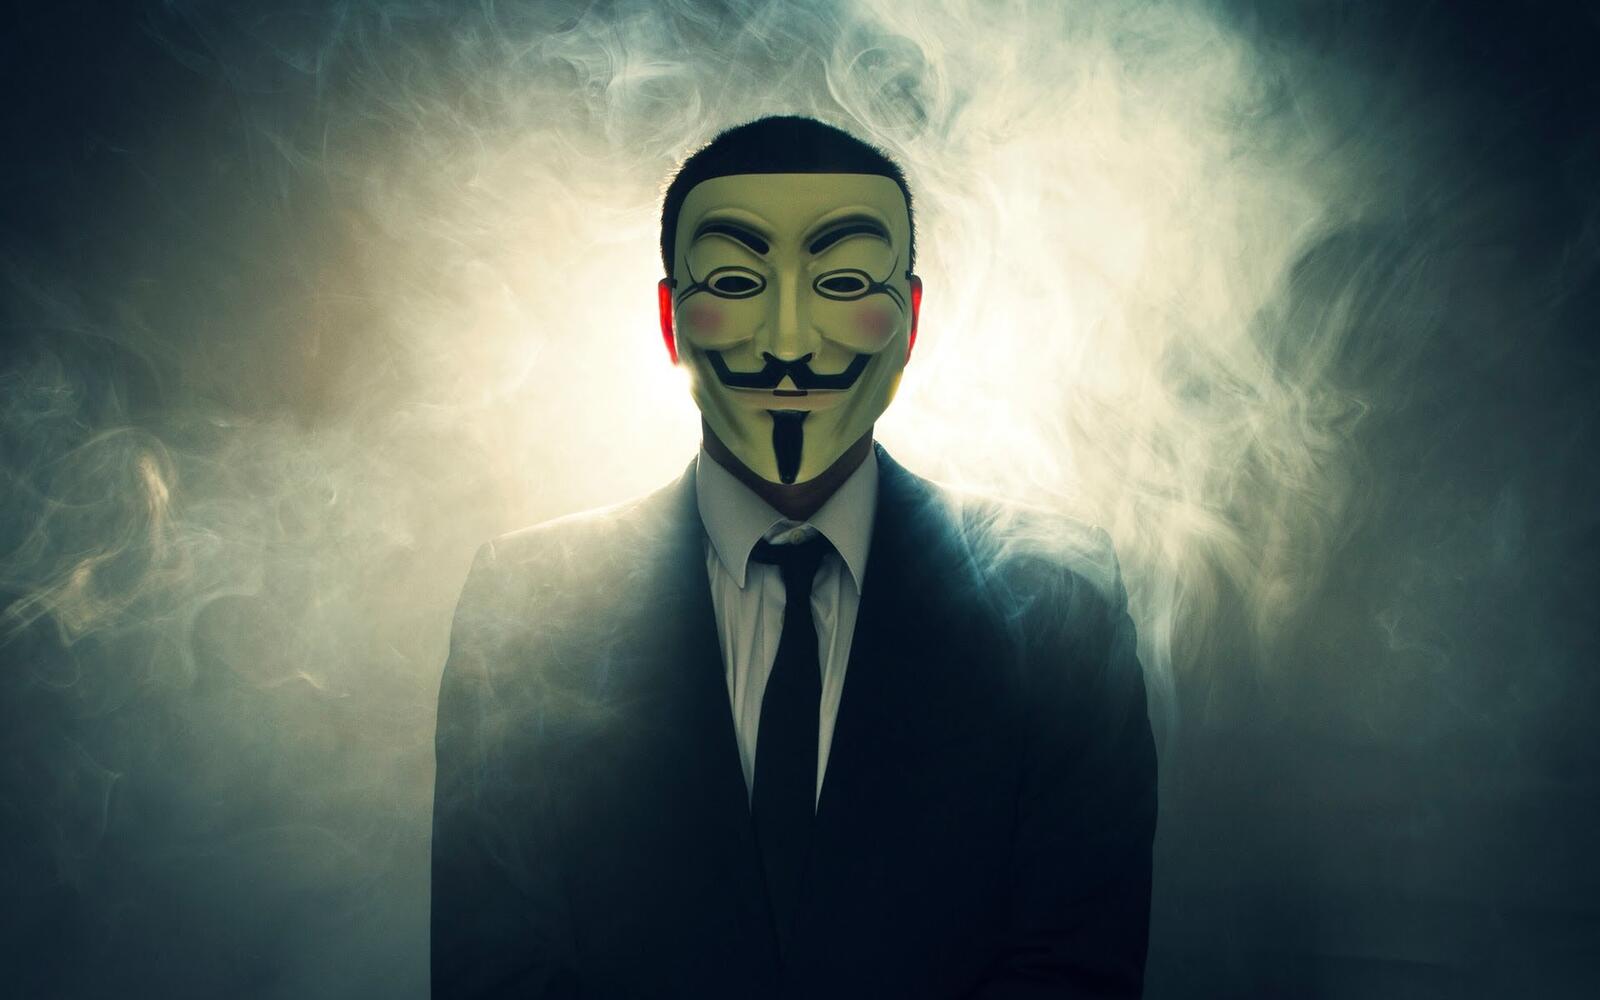 Wallpapers hacker vendetta anonymus on the desktop